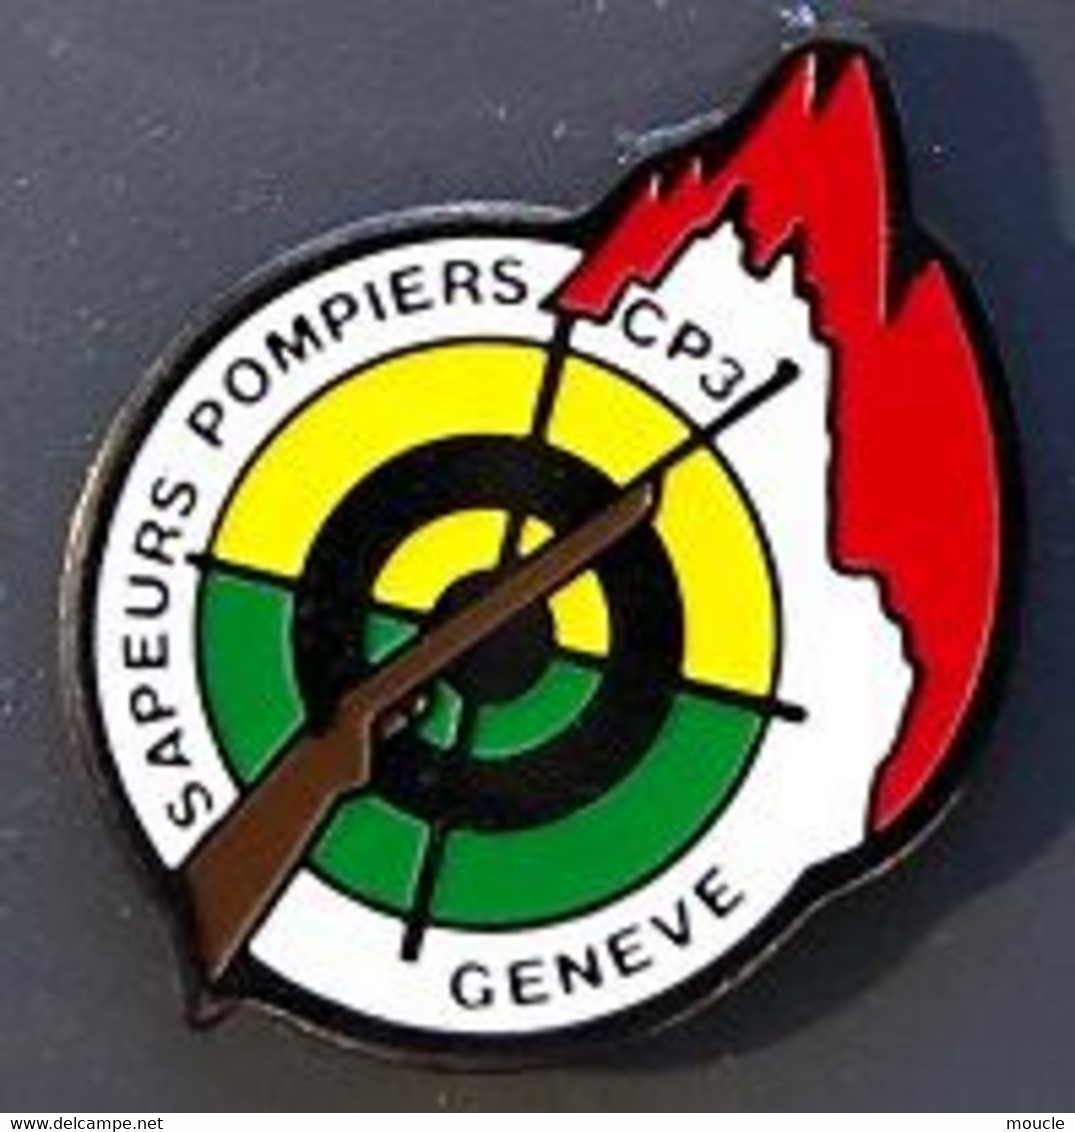 SAPEURS POMPIERS GENEVE CP3 - COMPAGNIE 3 - FUSIL - CIBLE - GENFER FEUERWEHTMANN - FIREFIGHTER GENEVA - POMPIERE -  (25) - Feuerwehr